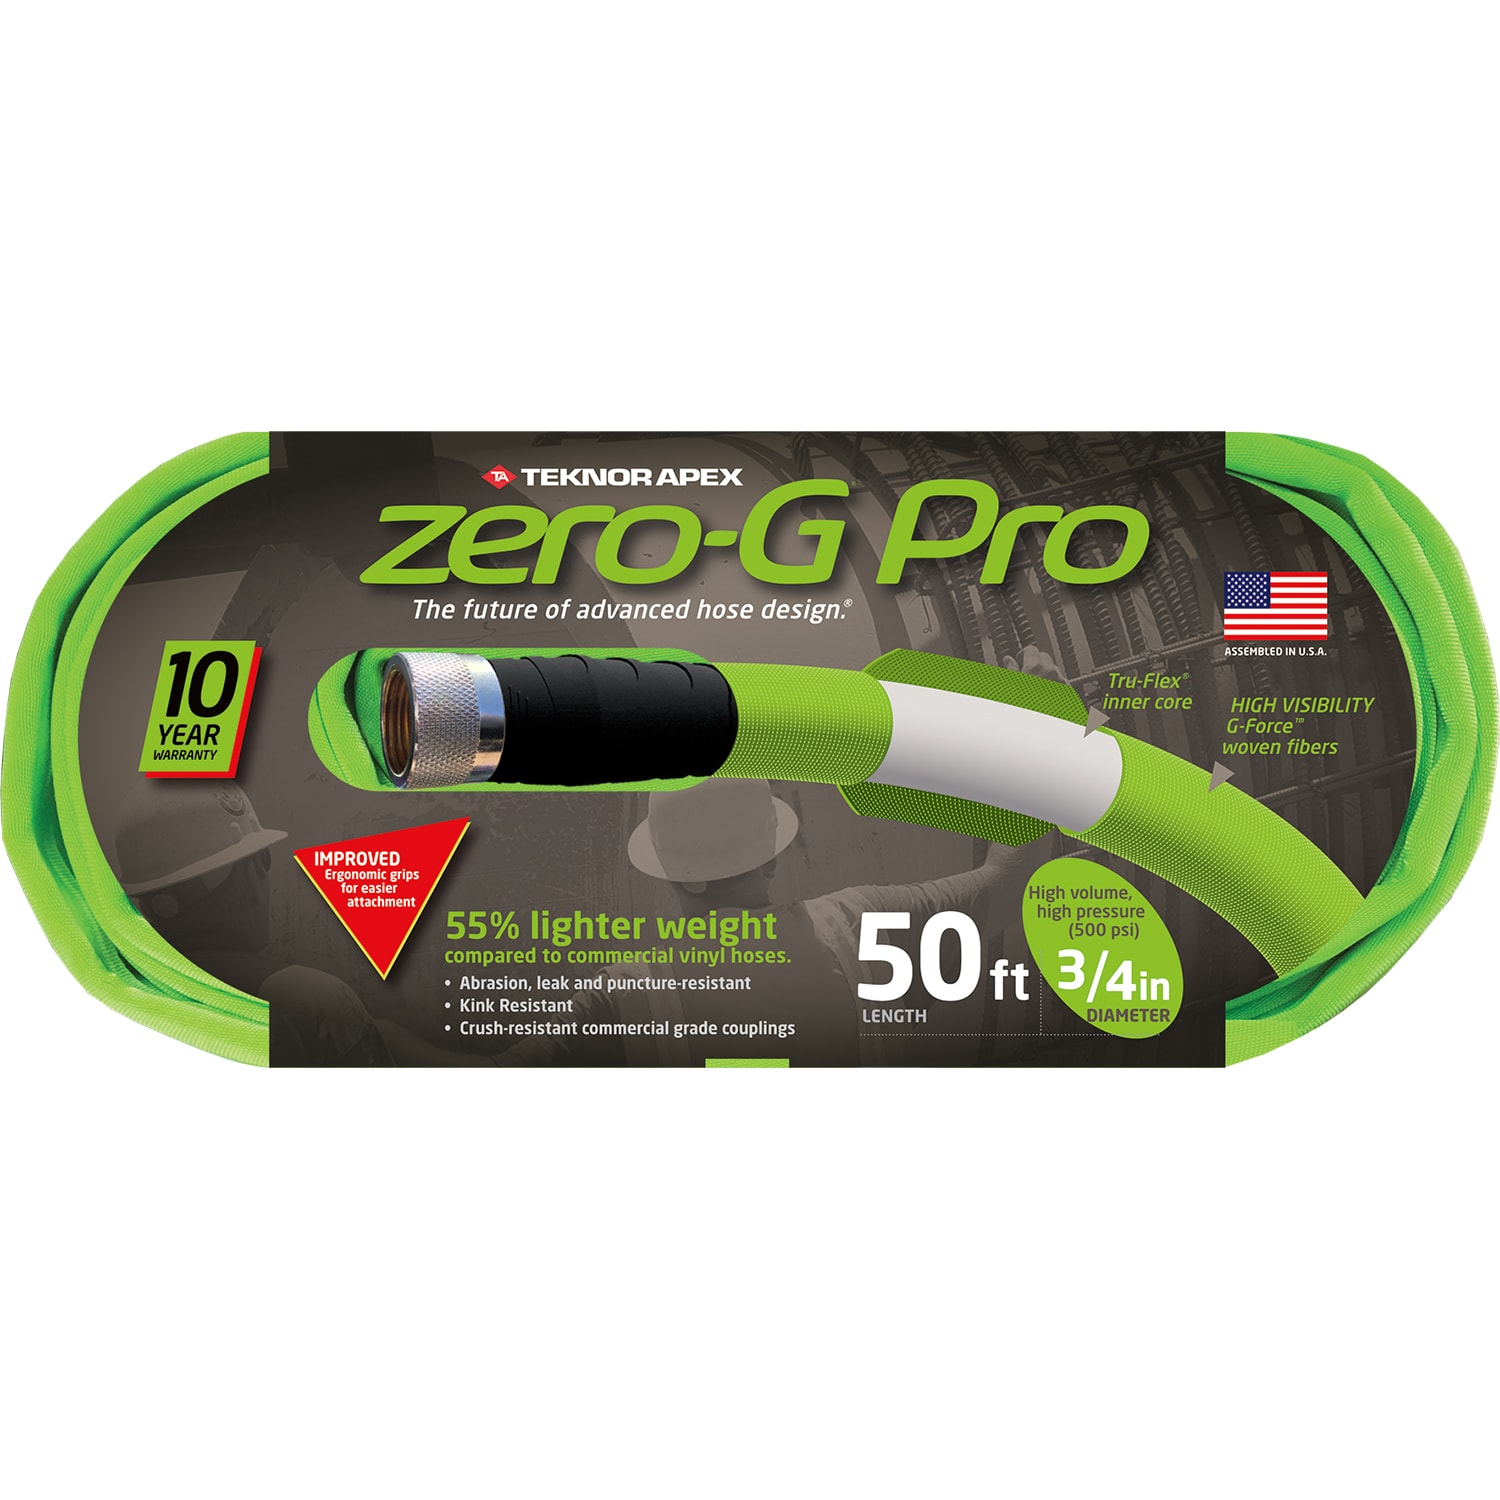 Zero-G Pro Teknor Apex 3/4-in x 50-ft Contractor-Duty Kink Free